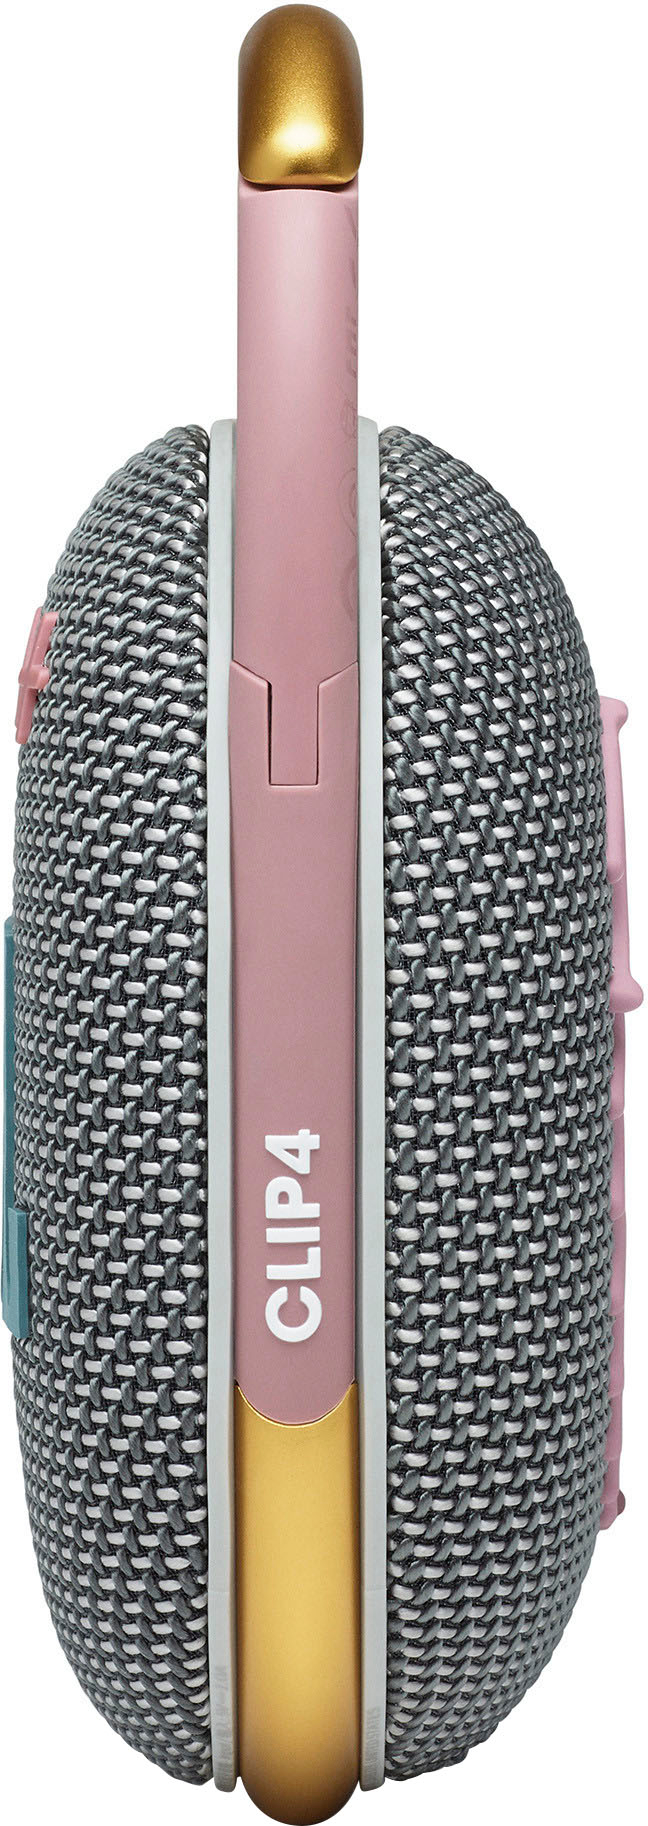 JBL CLIP4GRY Clip 4 Waterproof IP67 Portable Bluetooth Speaker - Gray